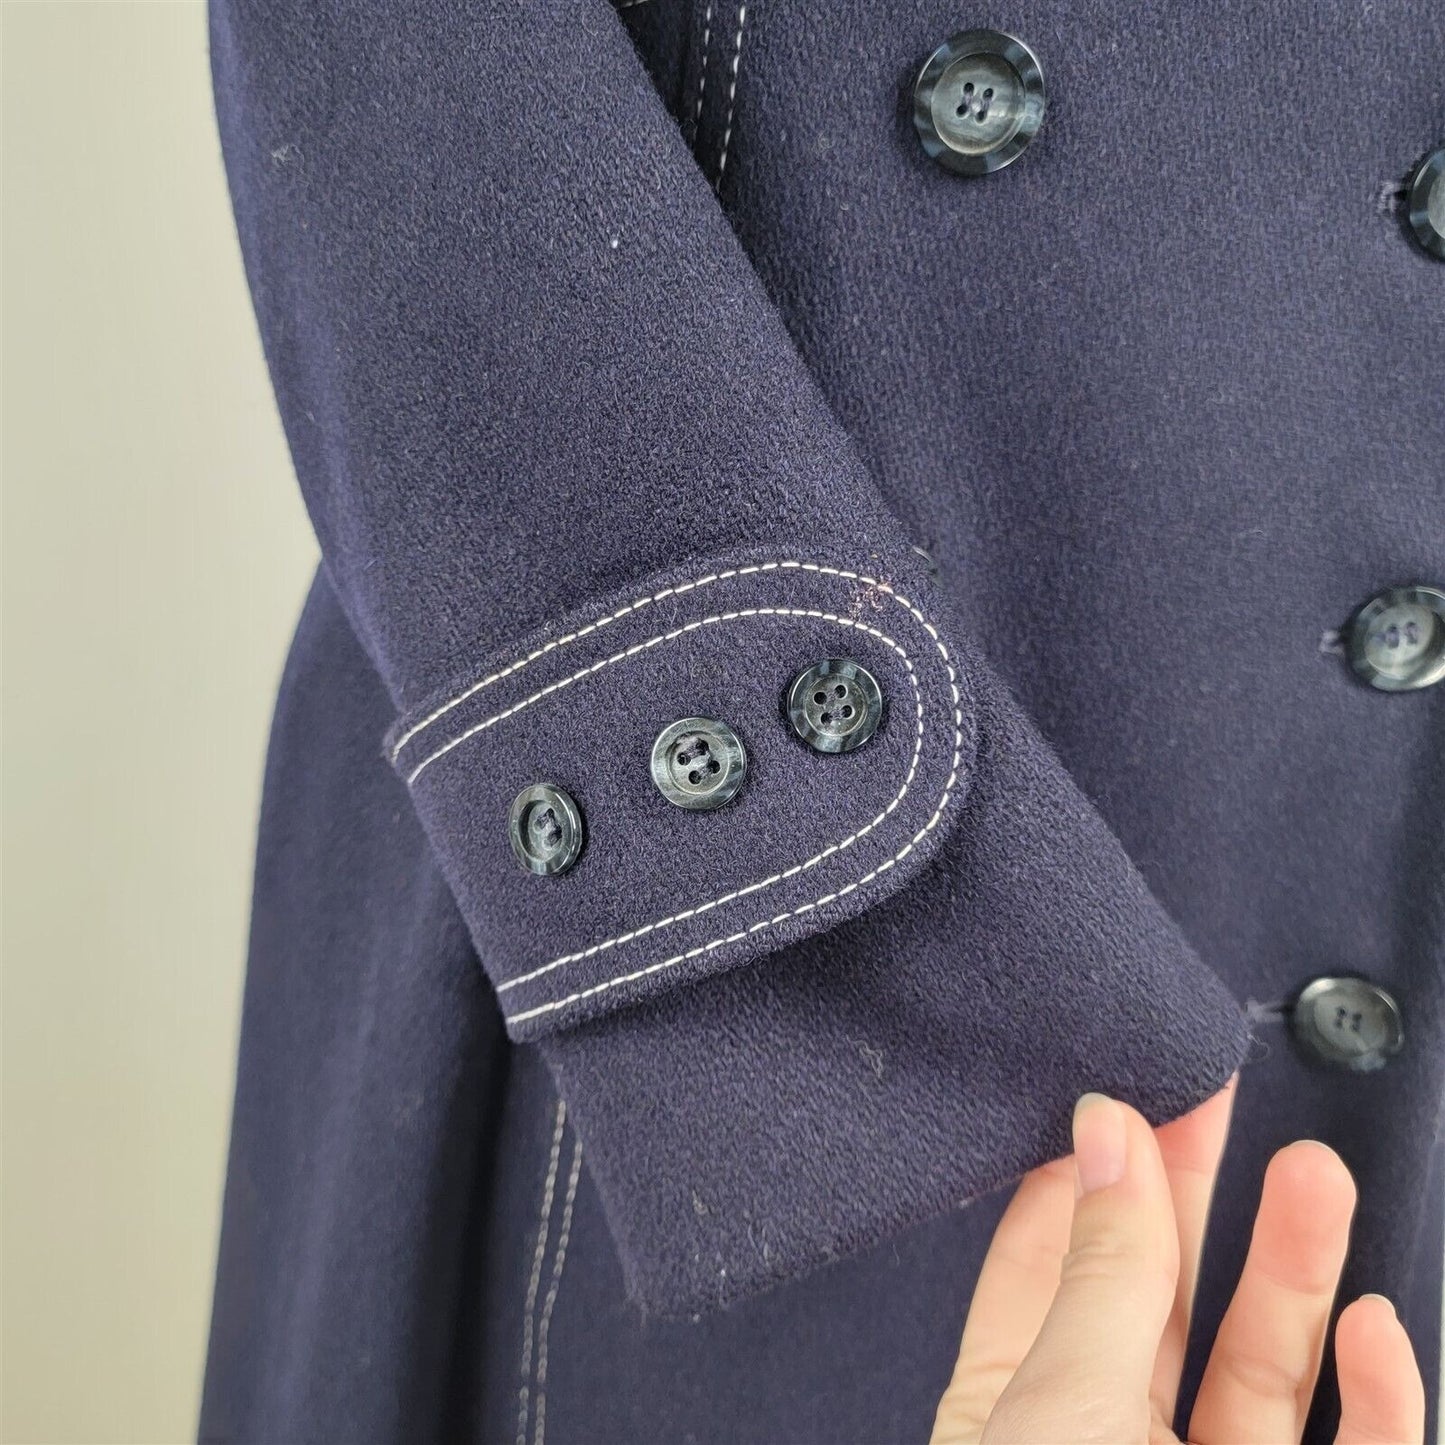 Vintage Bonders Navy Blue Long PeaCoat Double Breasted Hooded Jacket Womens M/L